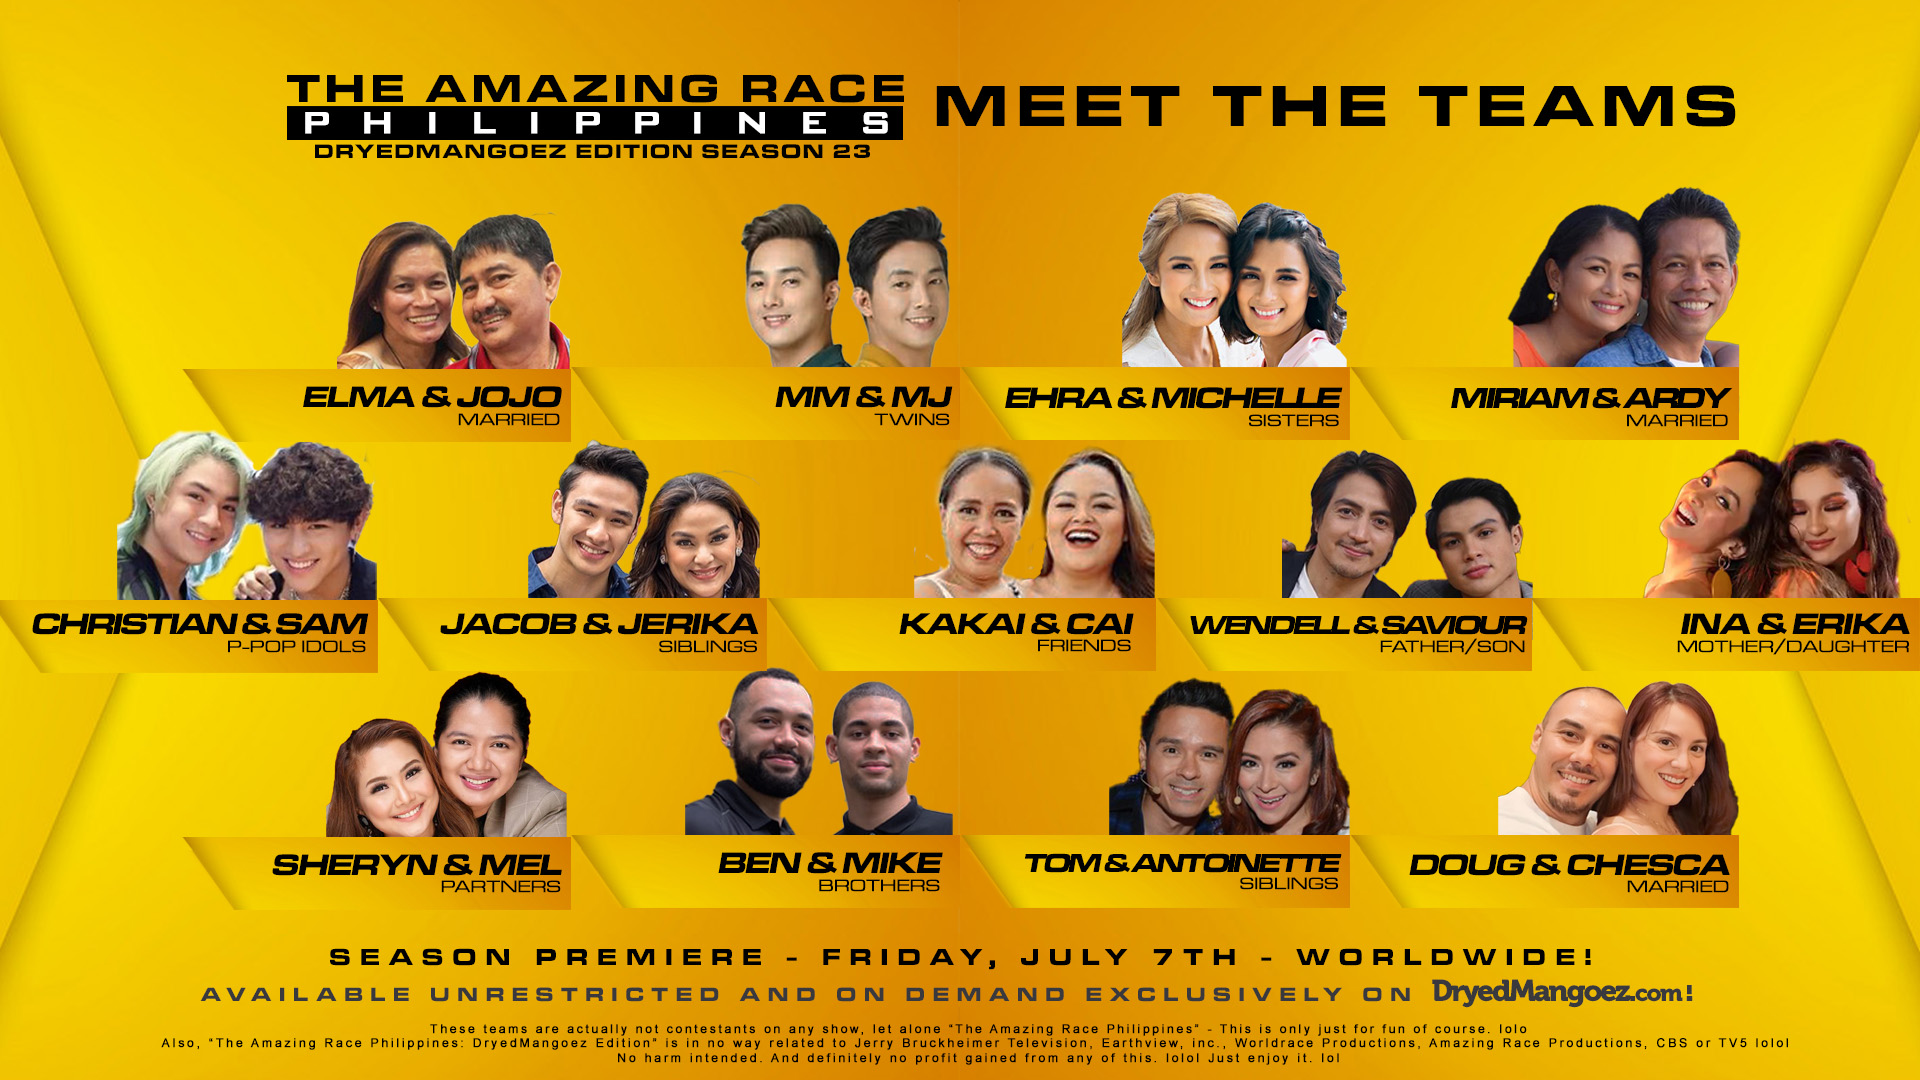 Meet the Teams of The Amazing Race Philippines: DryedMangoez Edition Season 23!